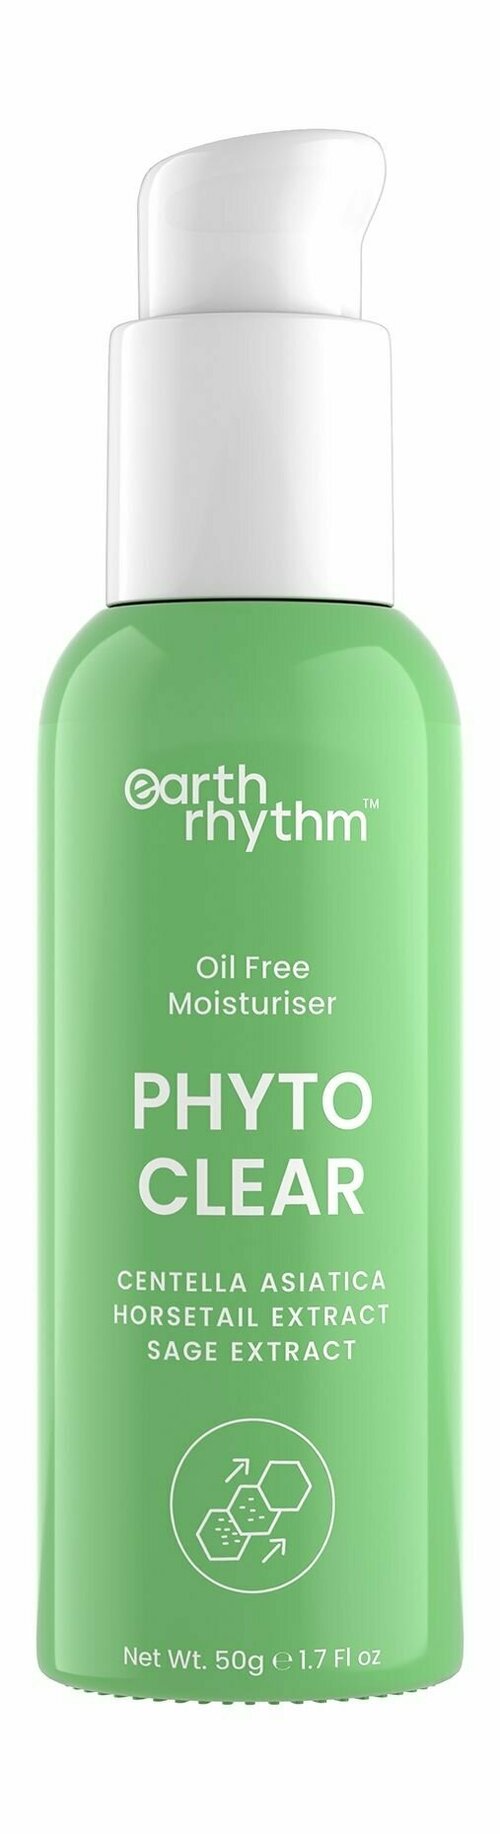 Увлажняющий крем для лица с центеллой азиатской и шалфеем / Earth Rhythm Phyto Clear Oil-Free Moisturiser